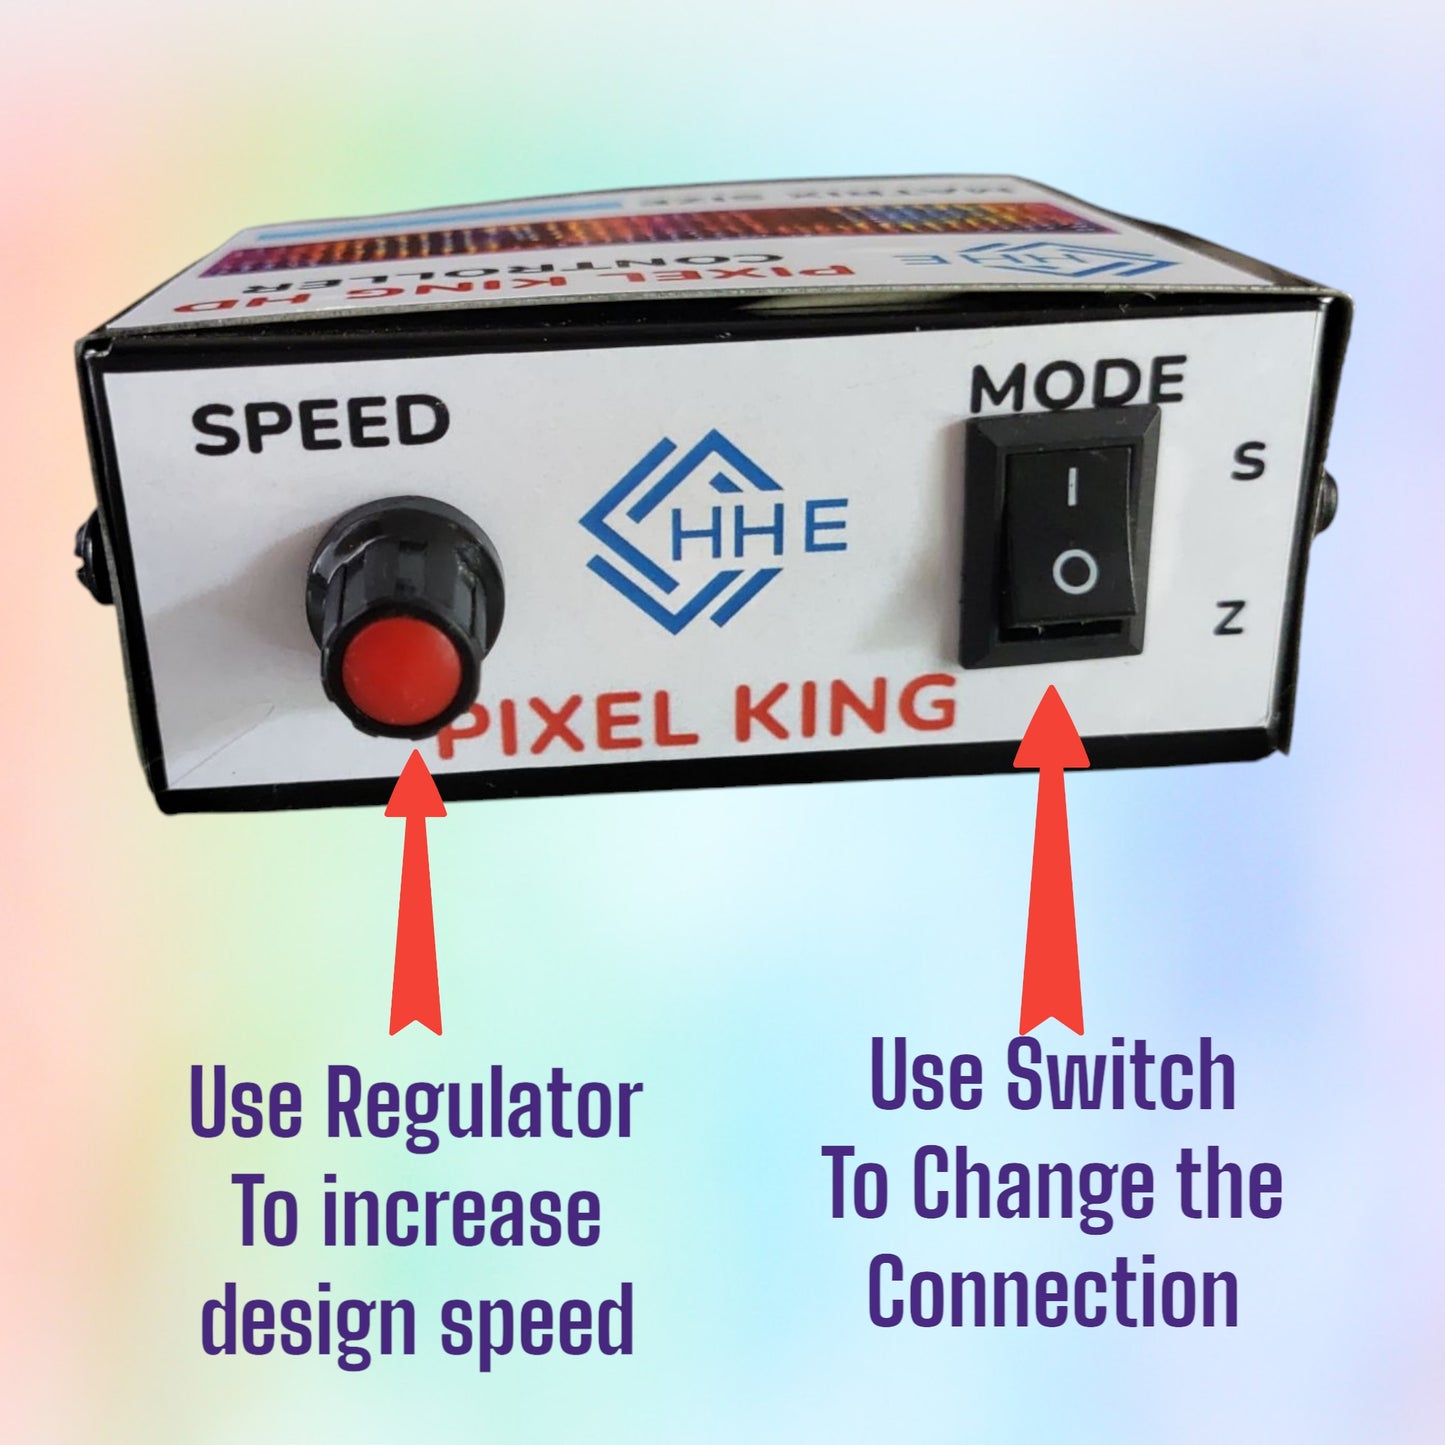 "PIXEL KING"  HD Controller